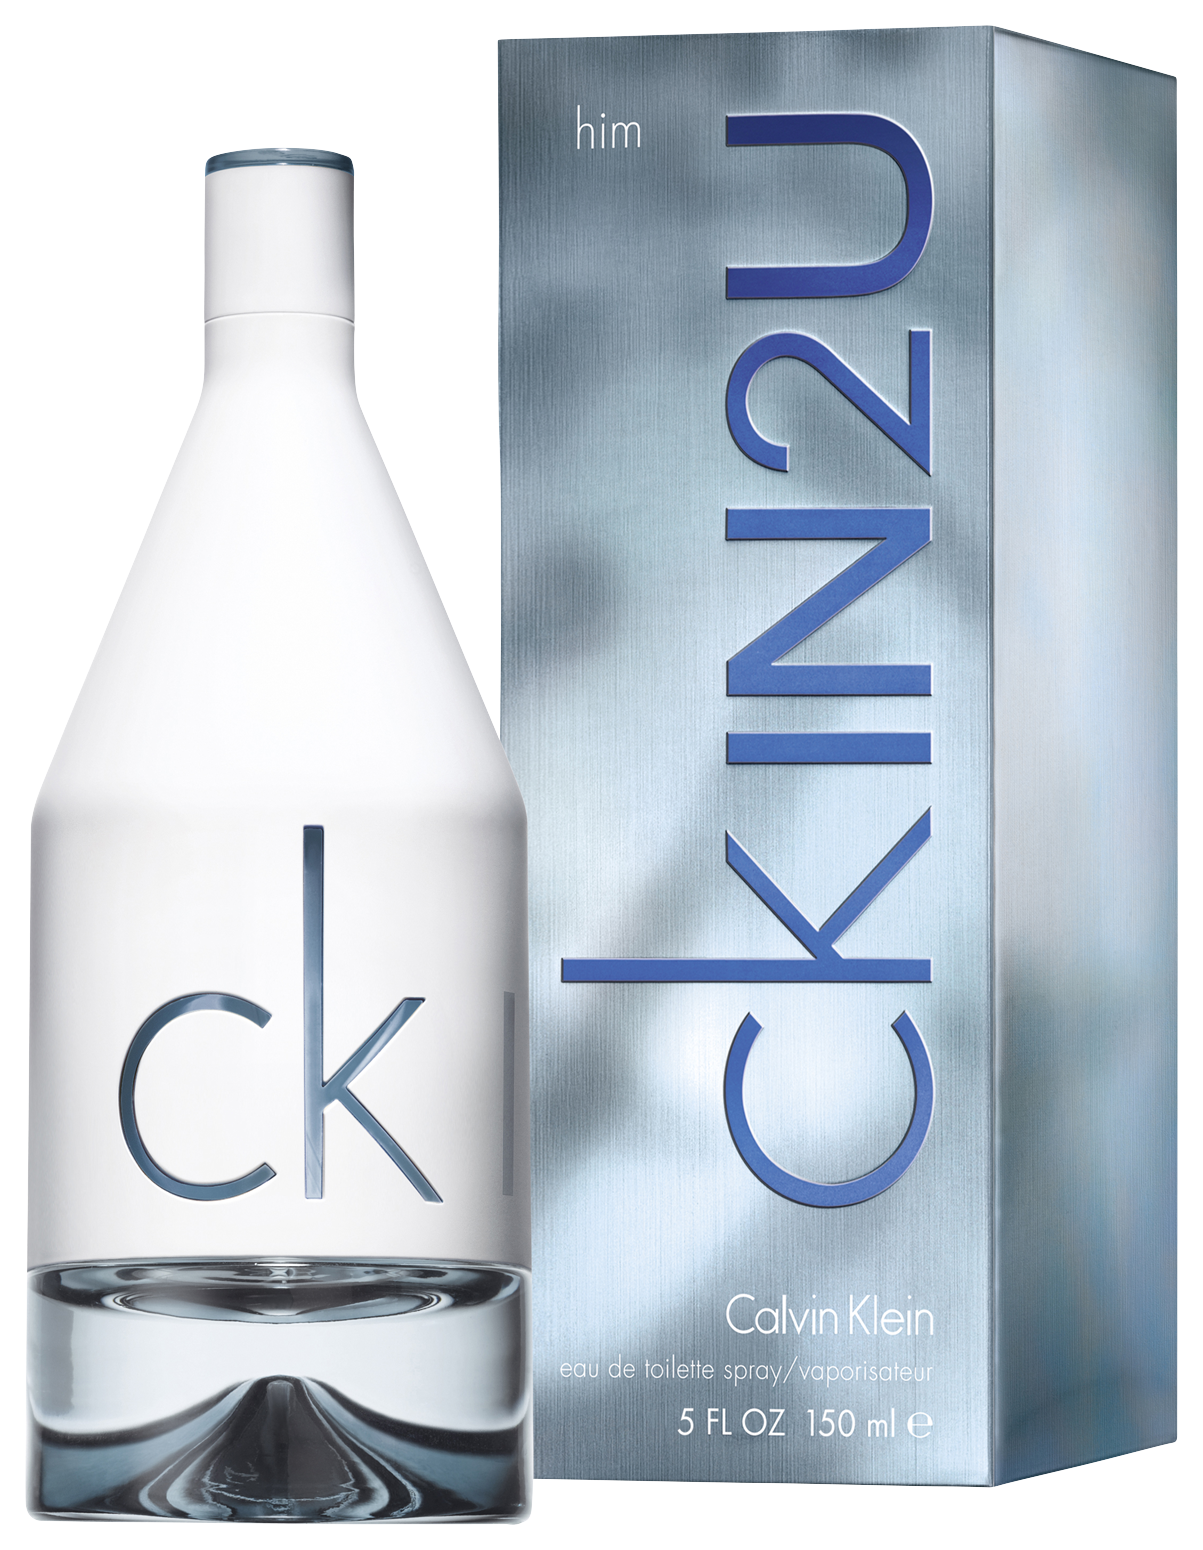 Calvin Klein CK in 2u for Him Eau de Toilette 150 ml